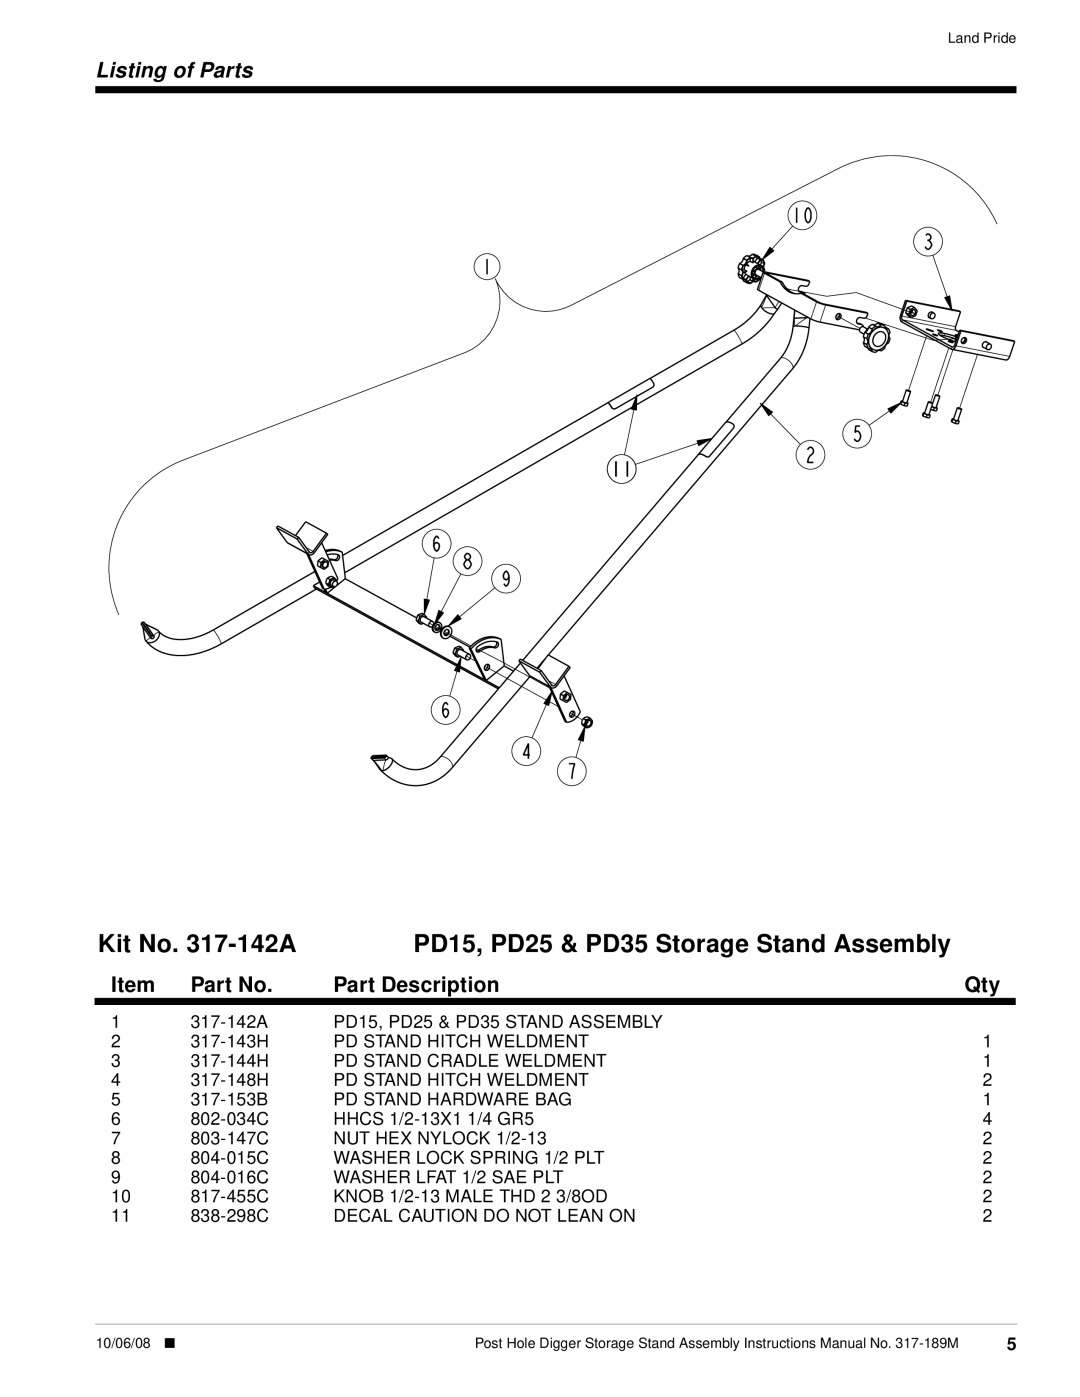 Land Pride DP25 Kit No. 317-142A, PD15, PD25 & PD35 Storage Stand Assembly, Listing of Parts, Part Description 